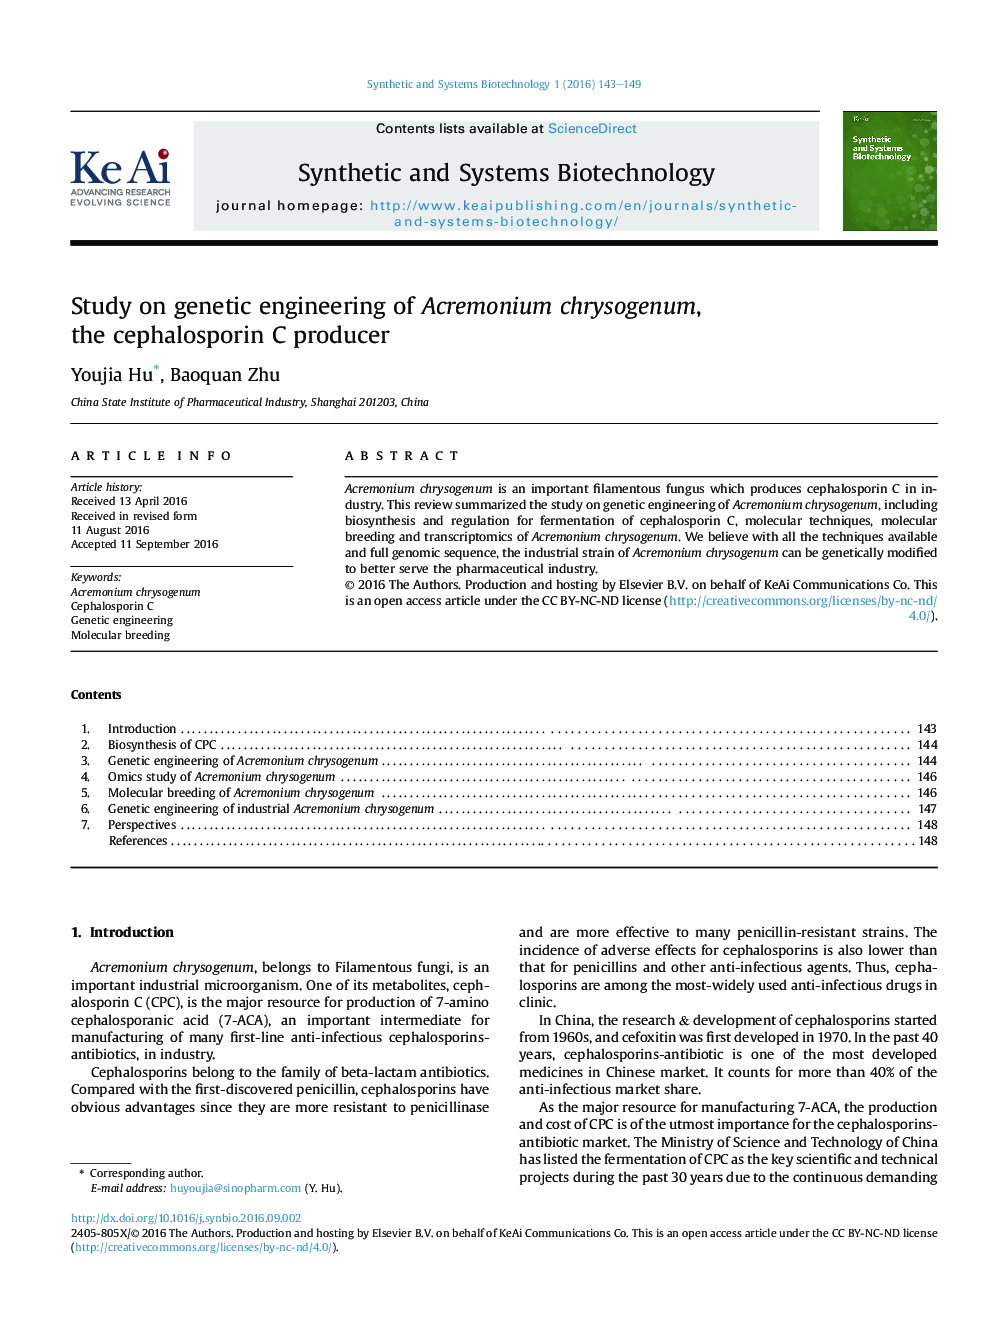 Study on genetic engineering of Acremonium chrysogenum, theÂ cephalosporin C producer